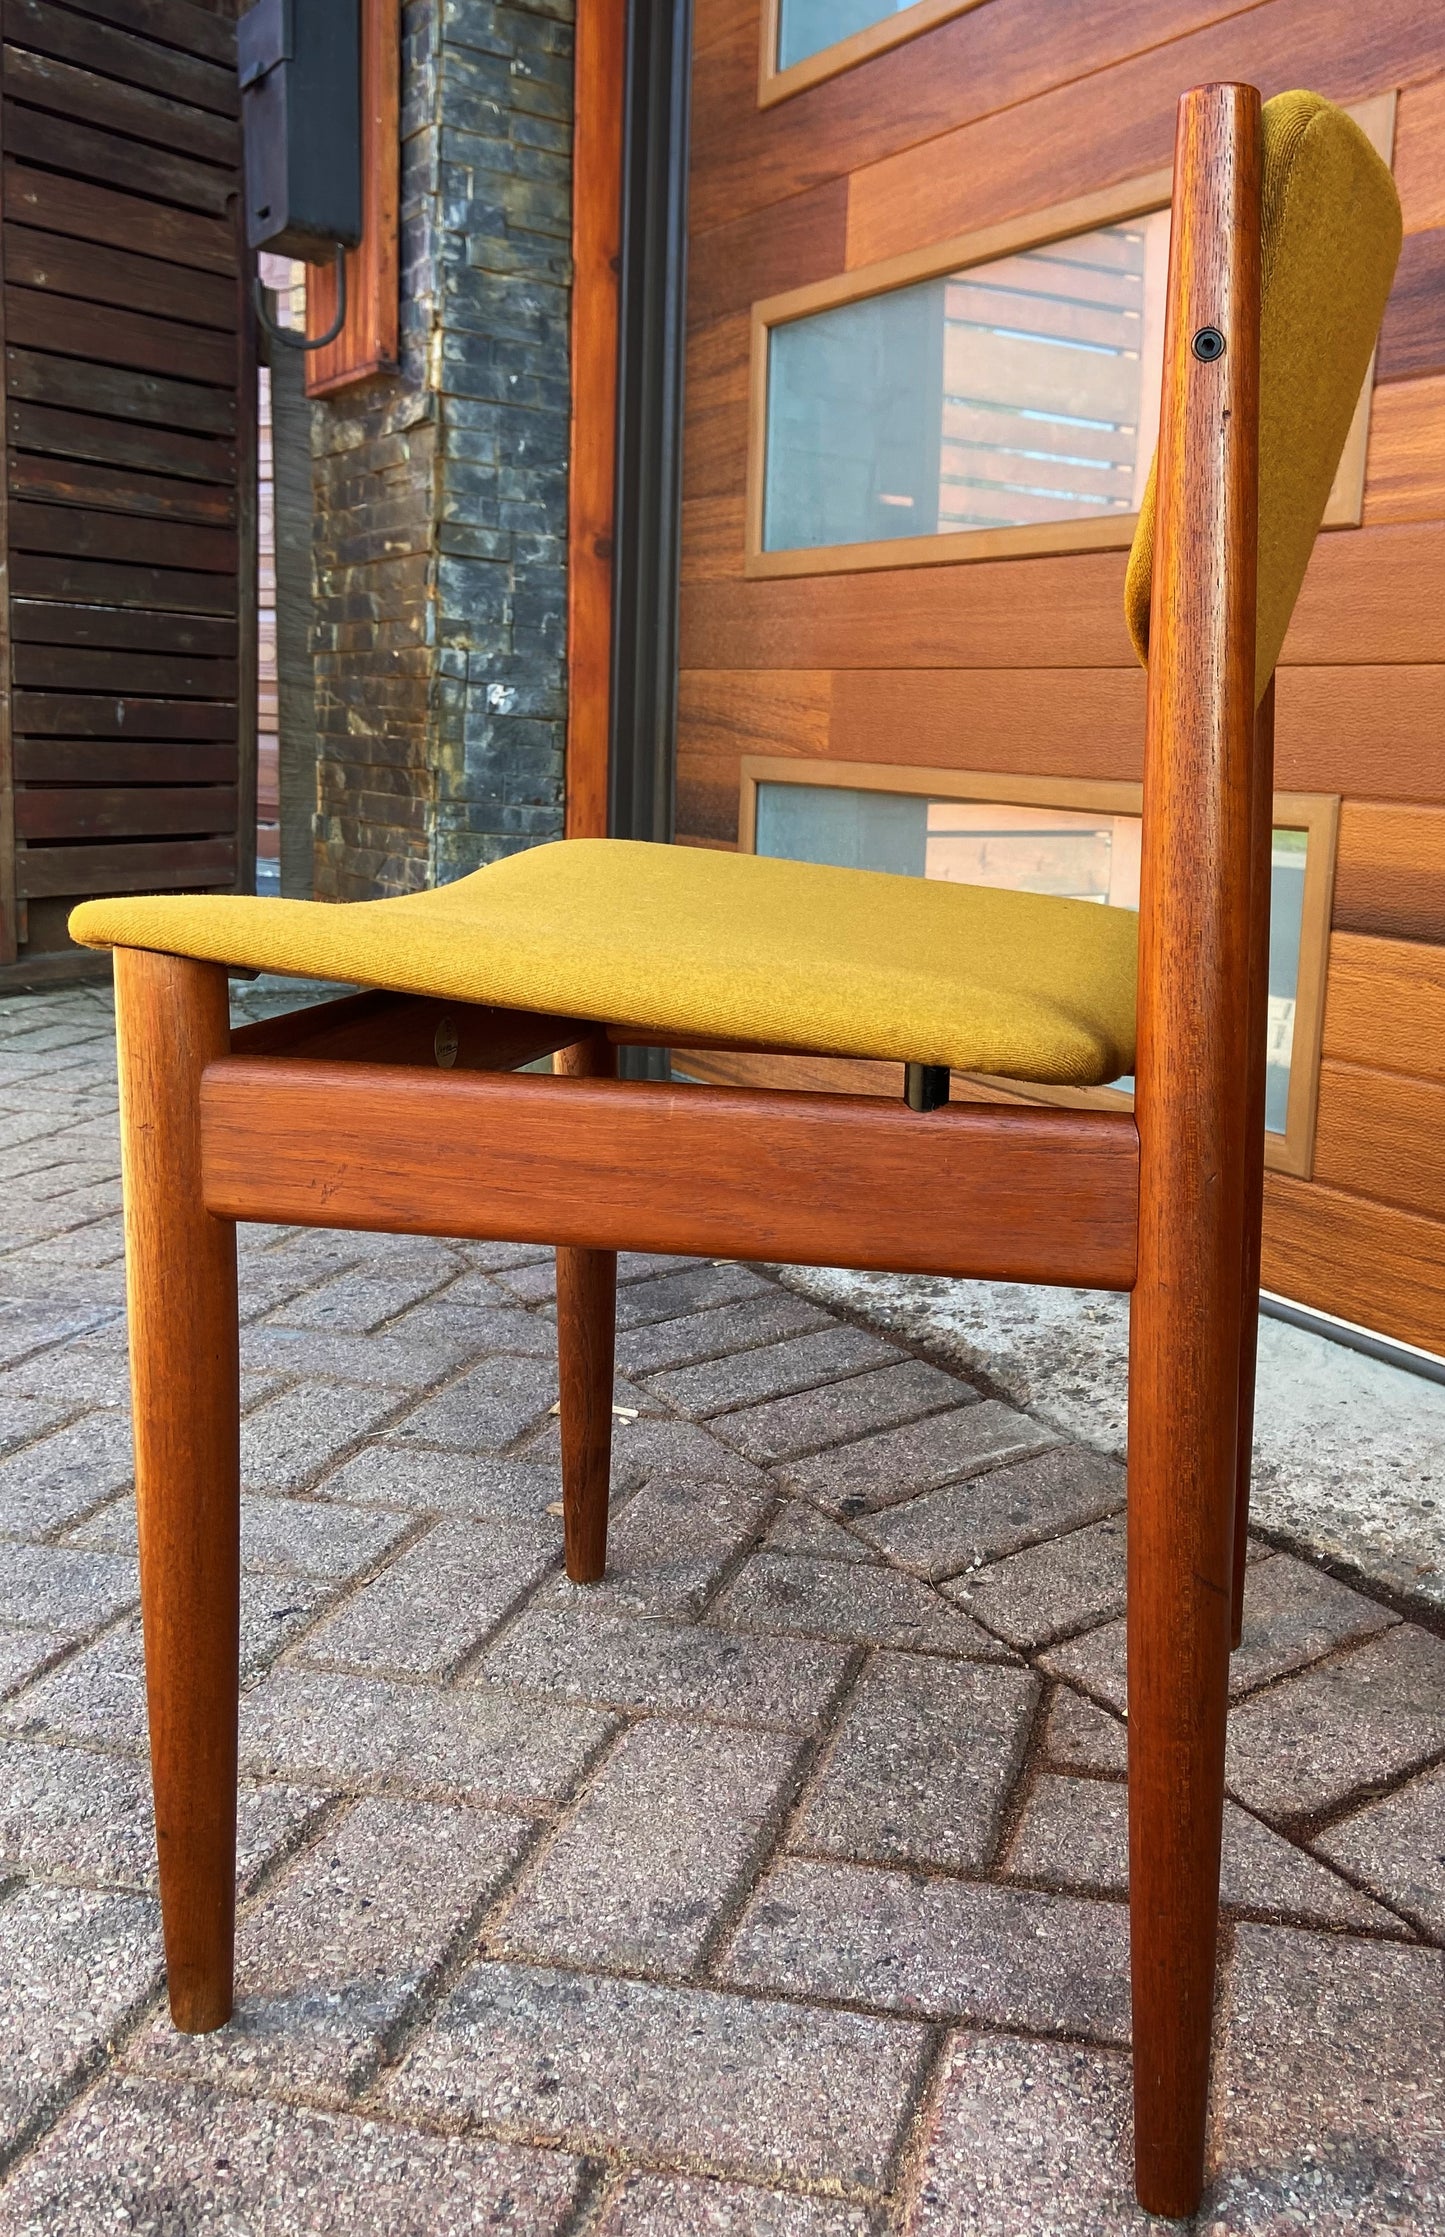 REFINISHED Danish Mid-Century Modern Teak Chair by Finn Juhl